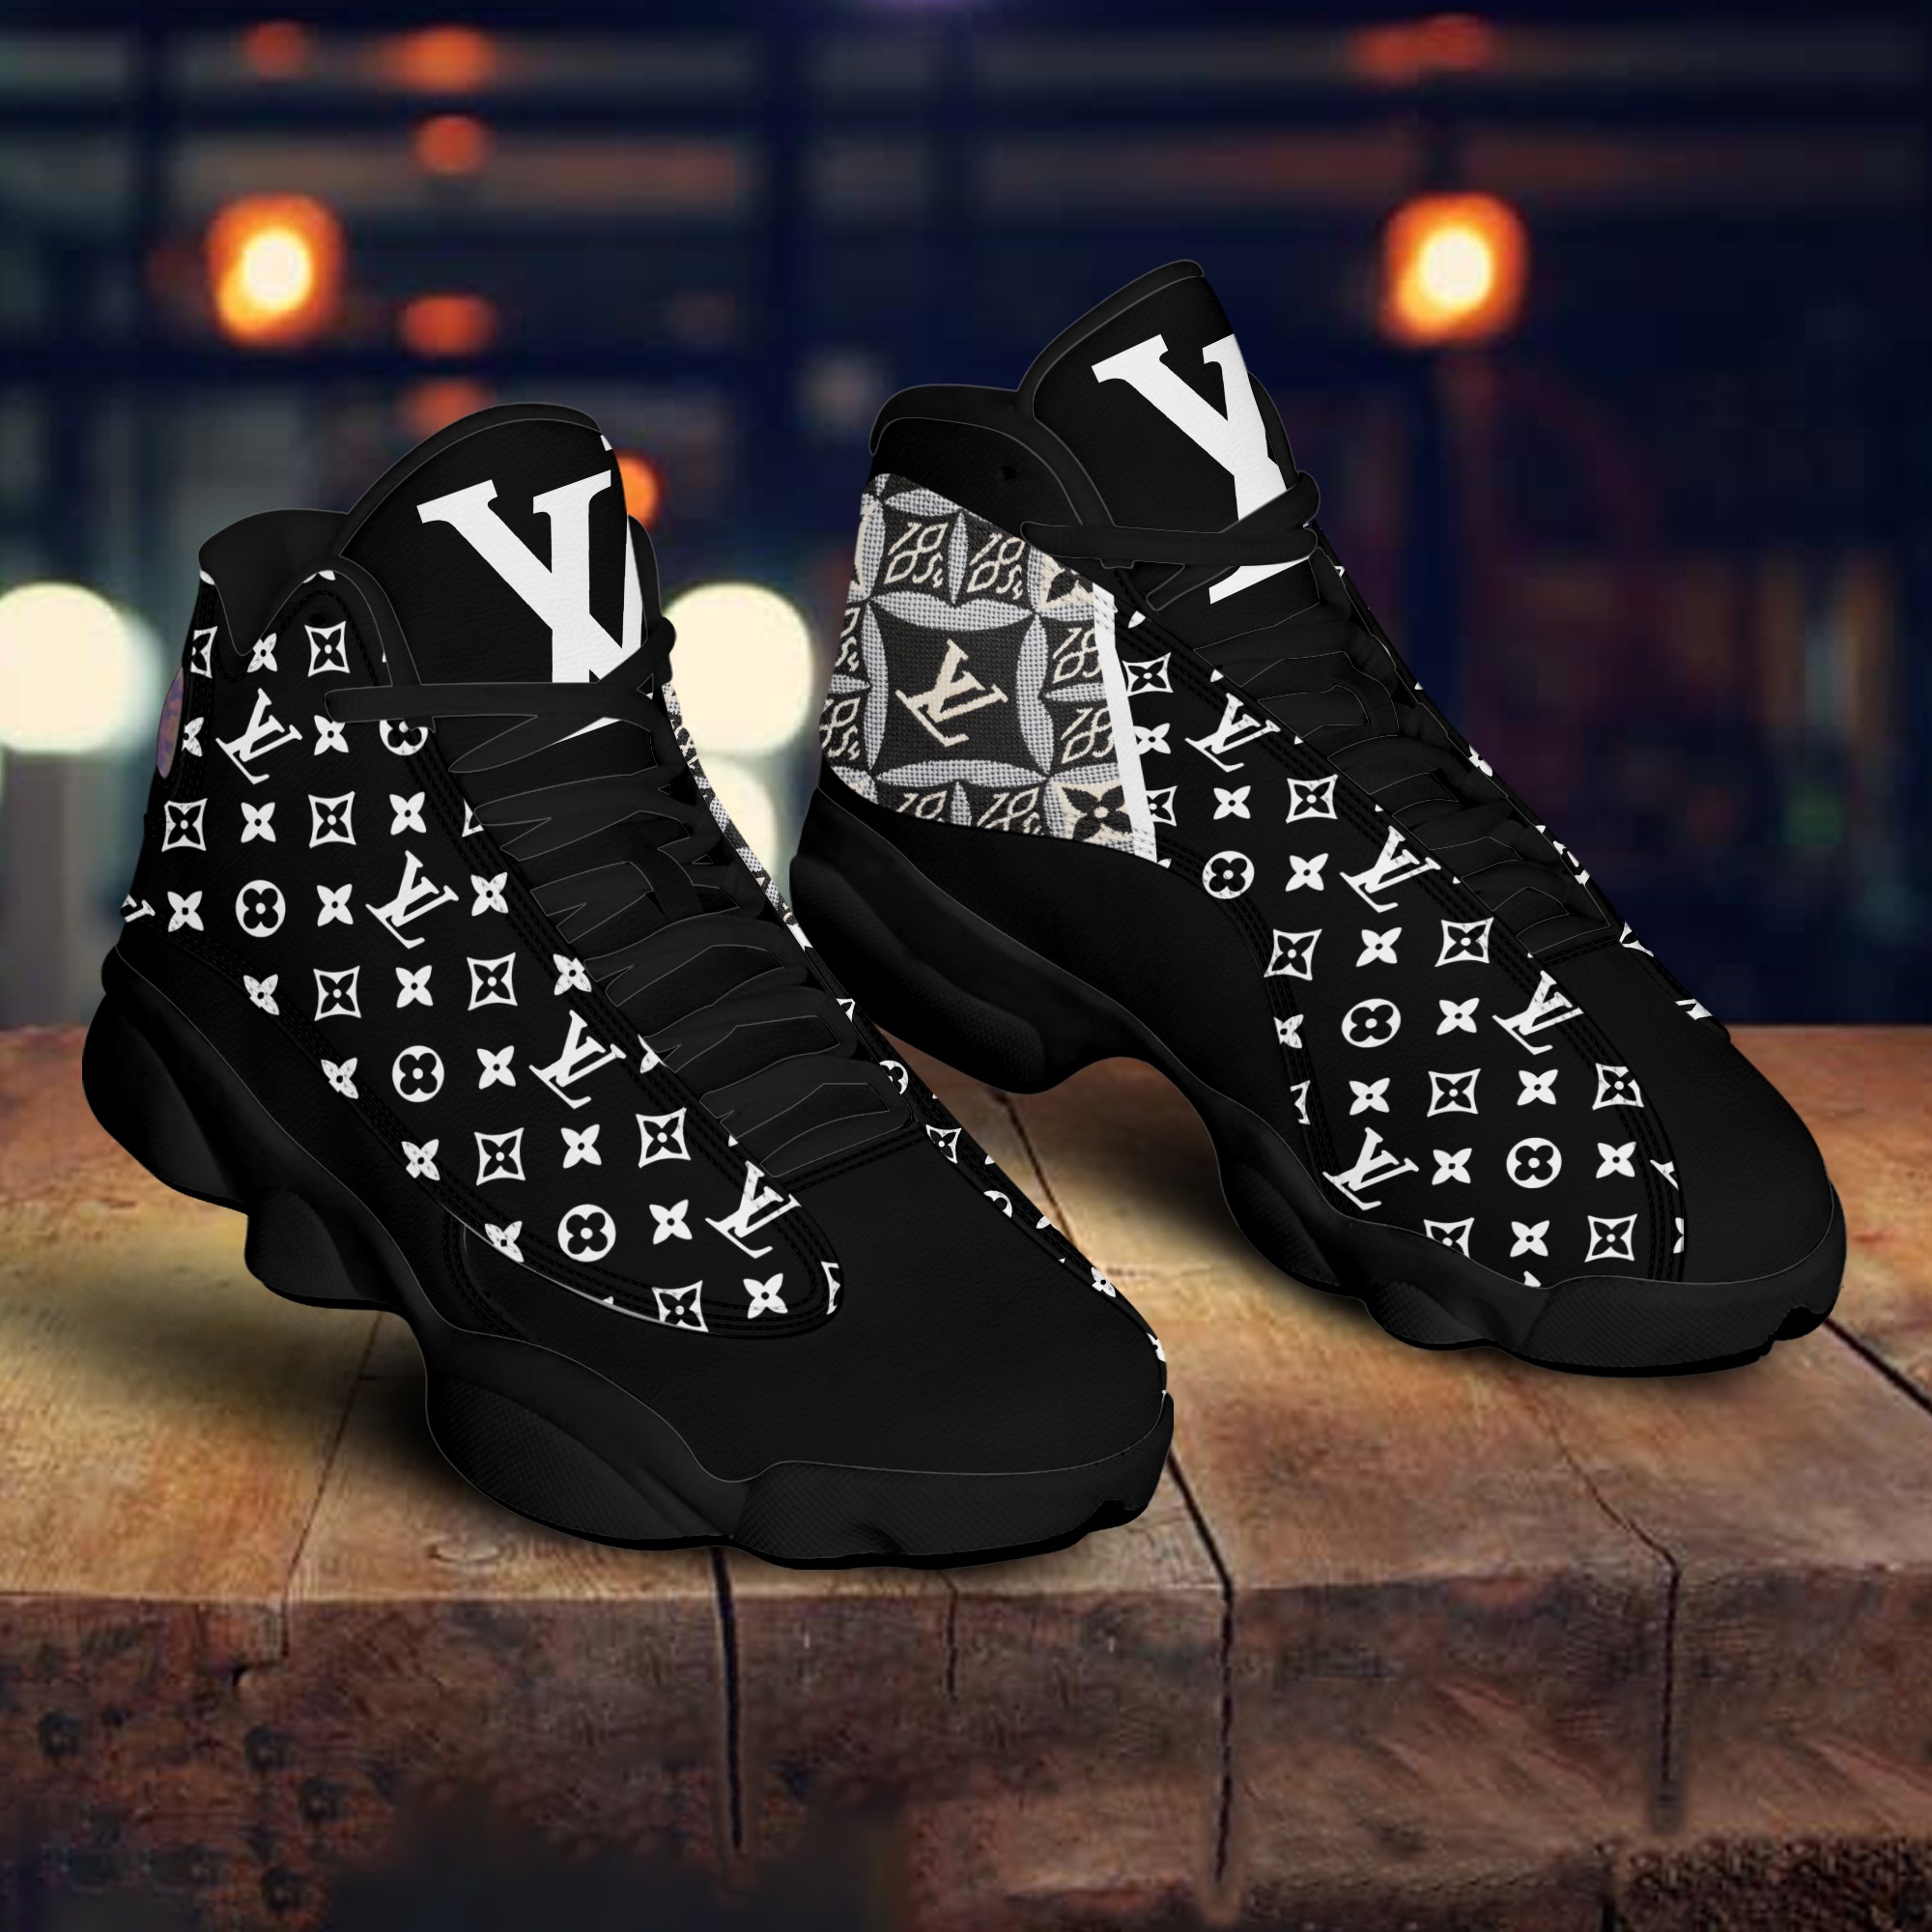 Louis Vuitton Ver 6 Air Jordan 13 Sneaker - It's RobinLoriNOW!